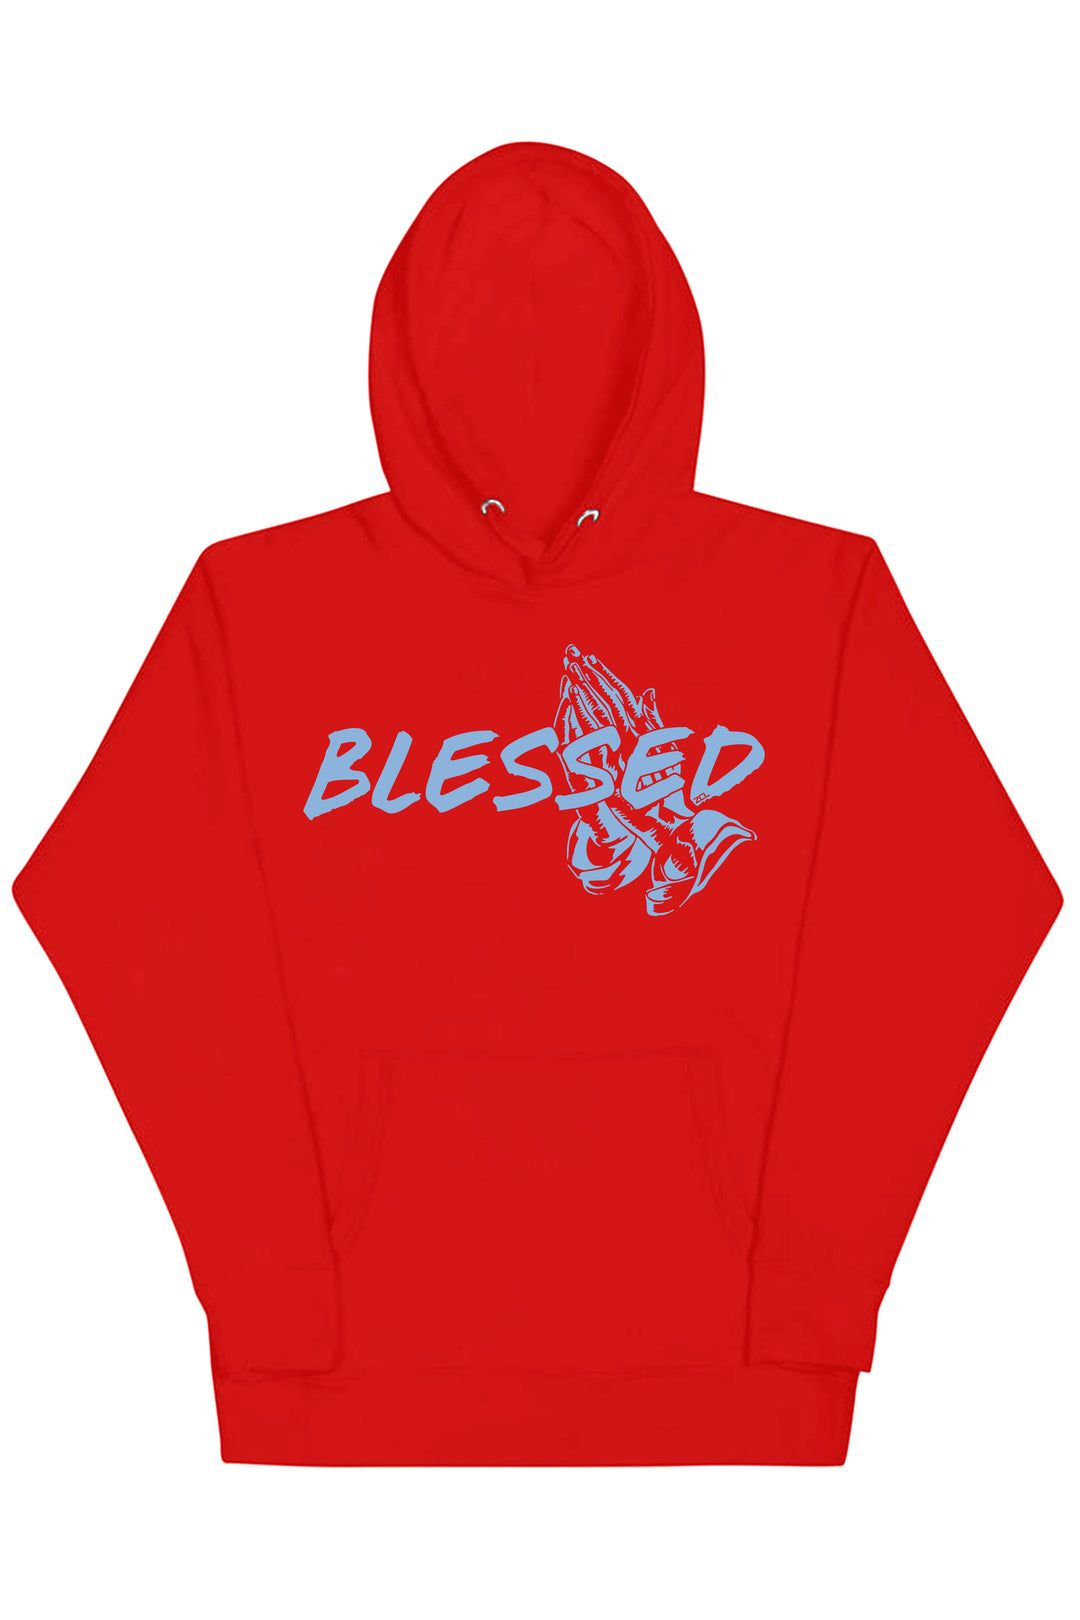 Blessed Hoodie (Powder Blue Logo) - Zamage